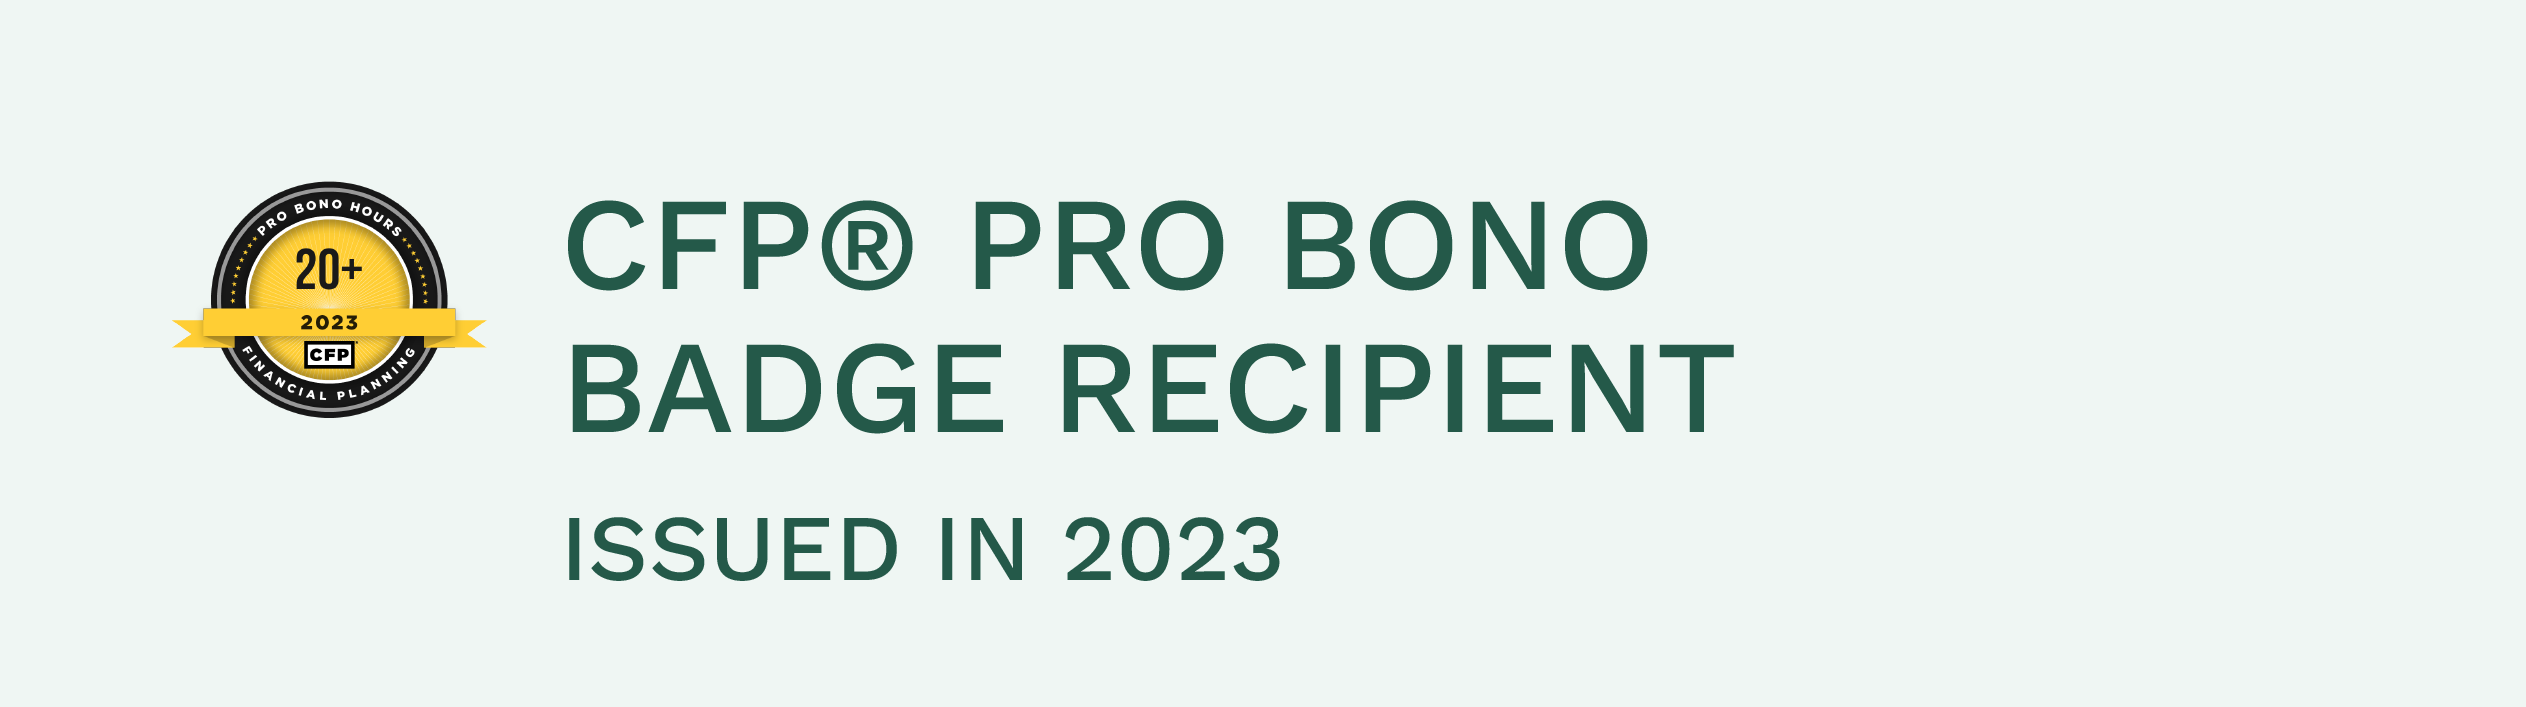 CFP PRO BONO Badge Recipient 2023